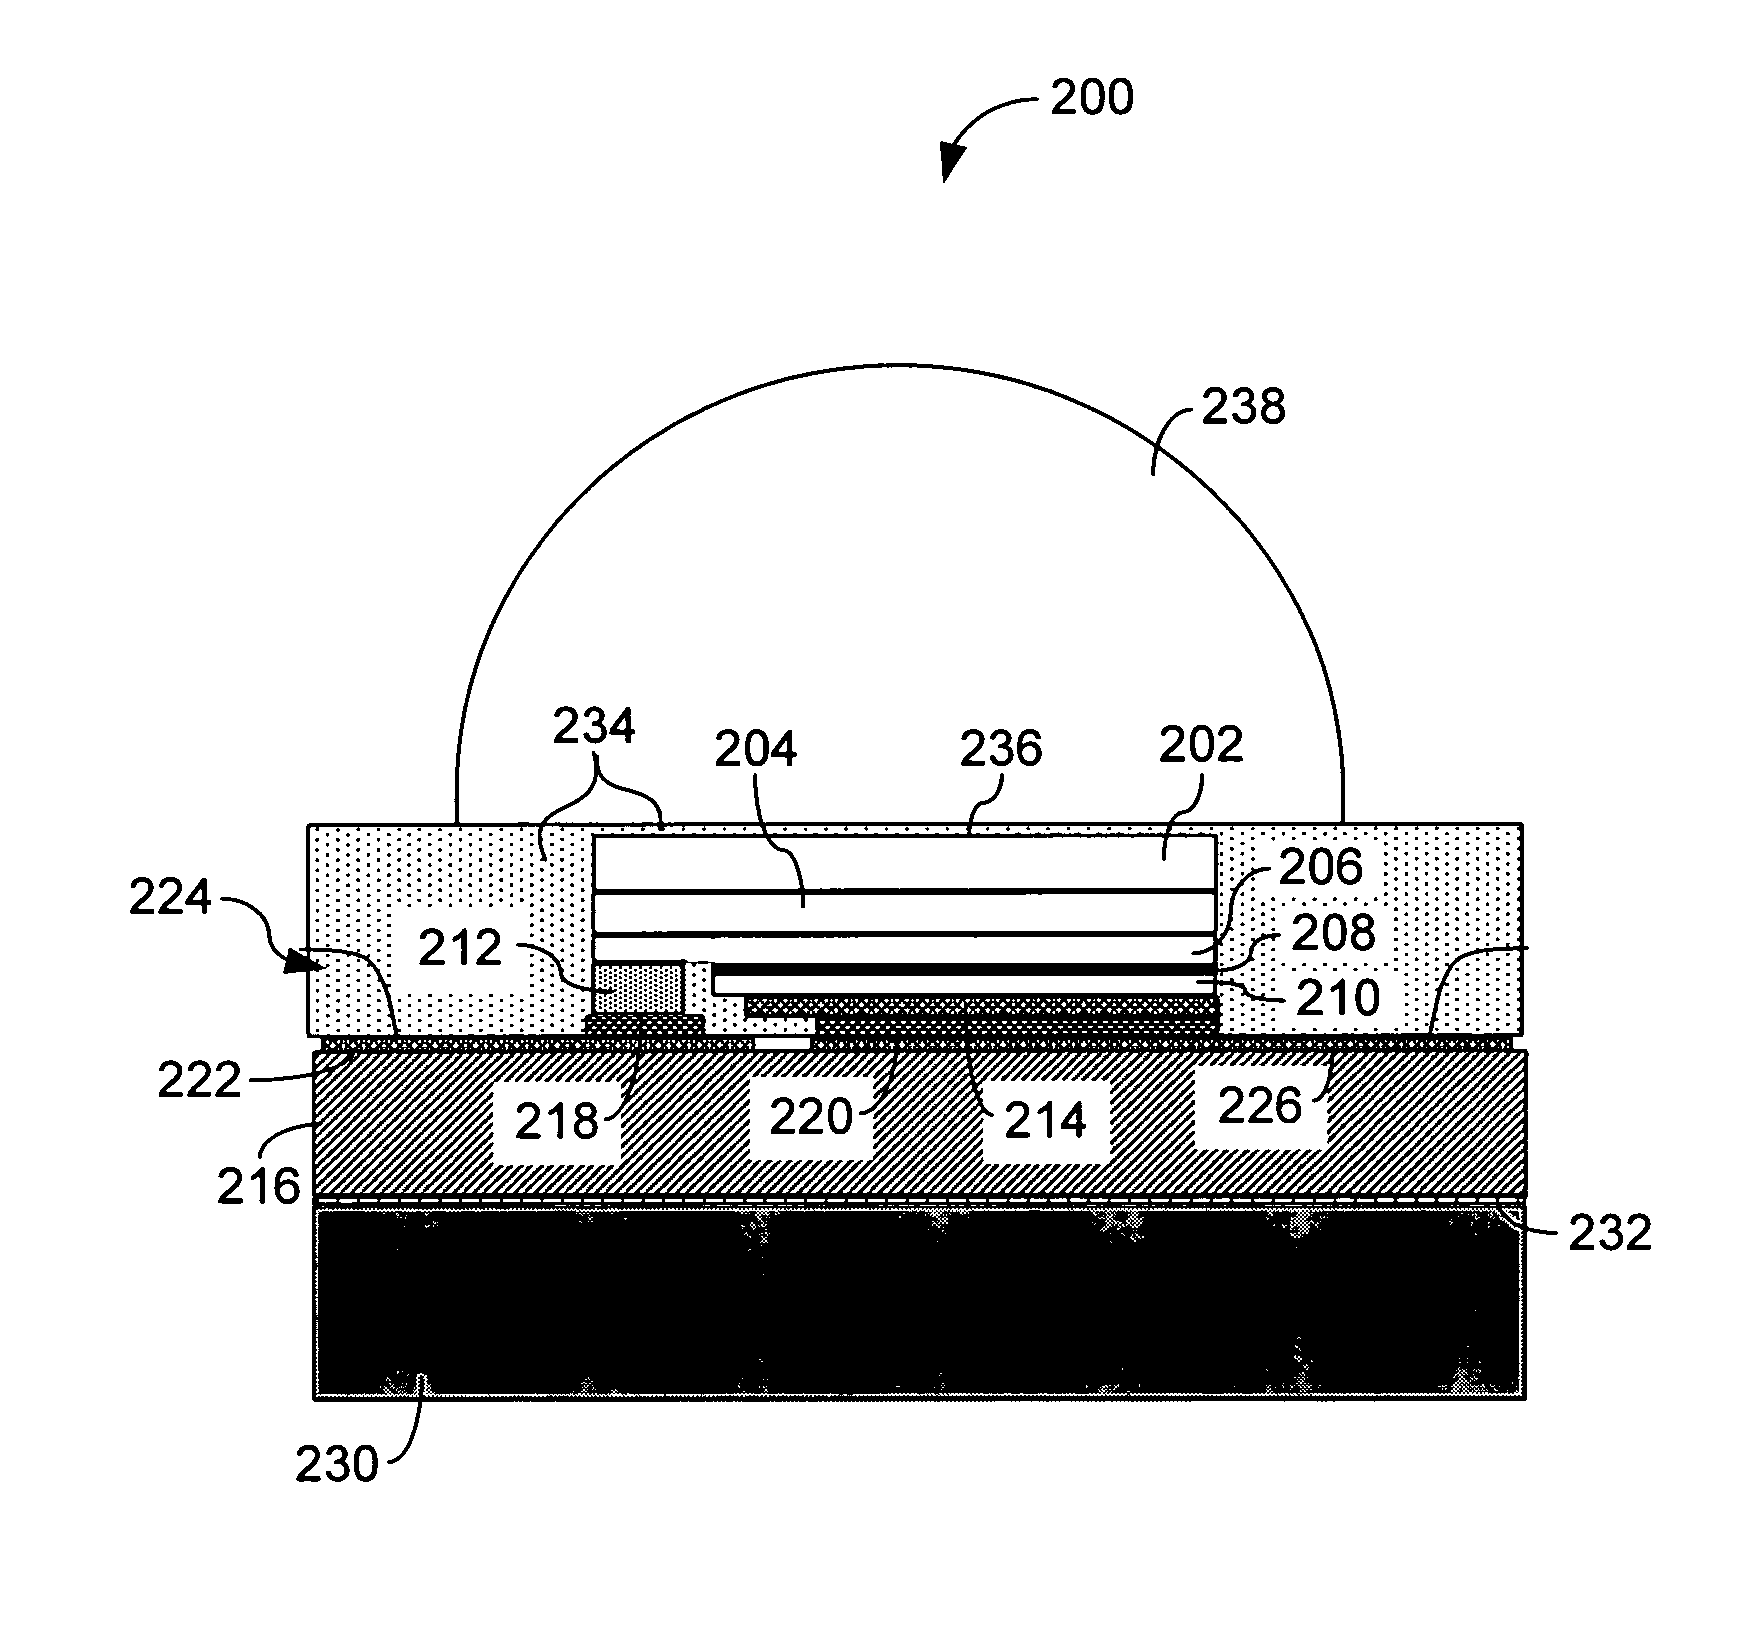 Encapsulation and packaging of ultraviolet and deep-ultraviolet light emitting diodes